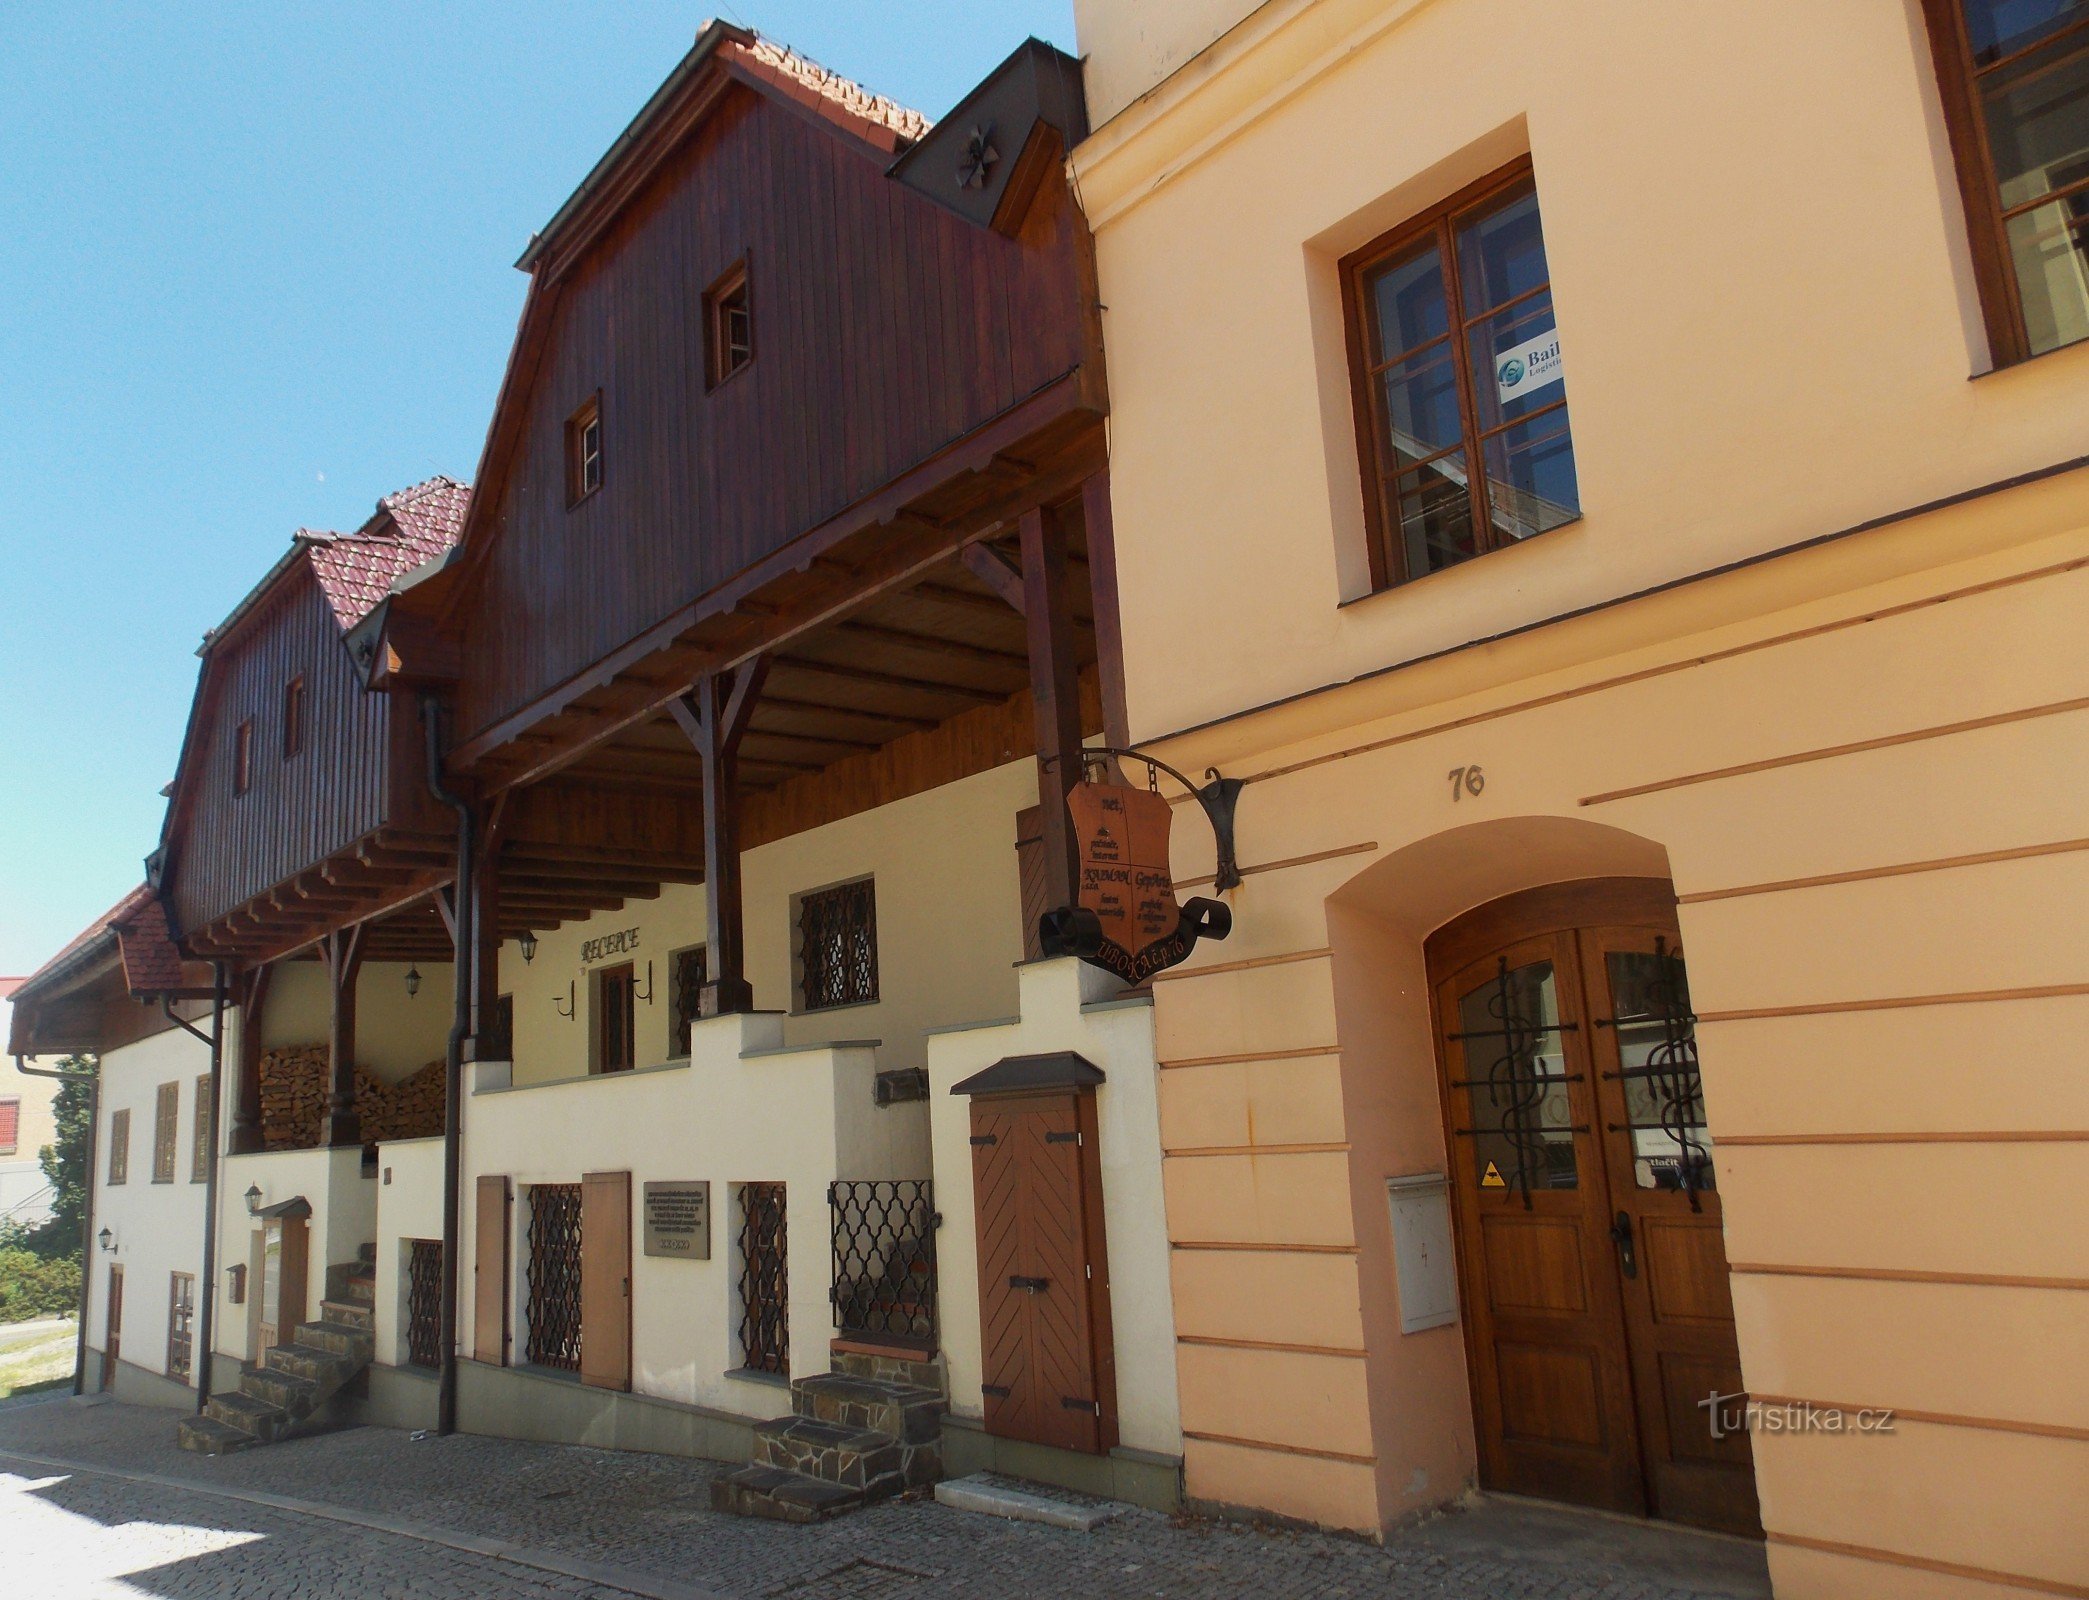 Architectural monument - three merchant houses in Frýdek